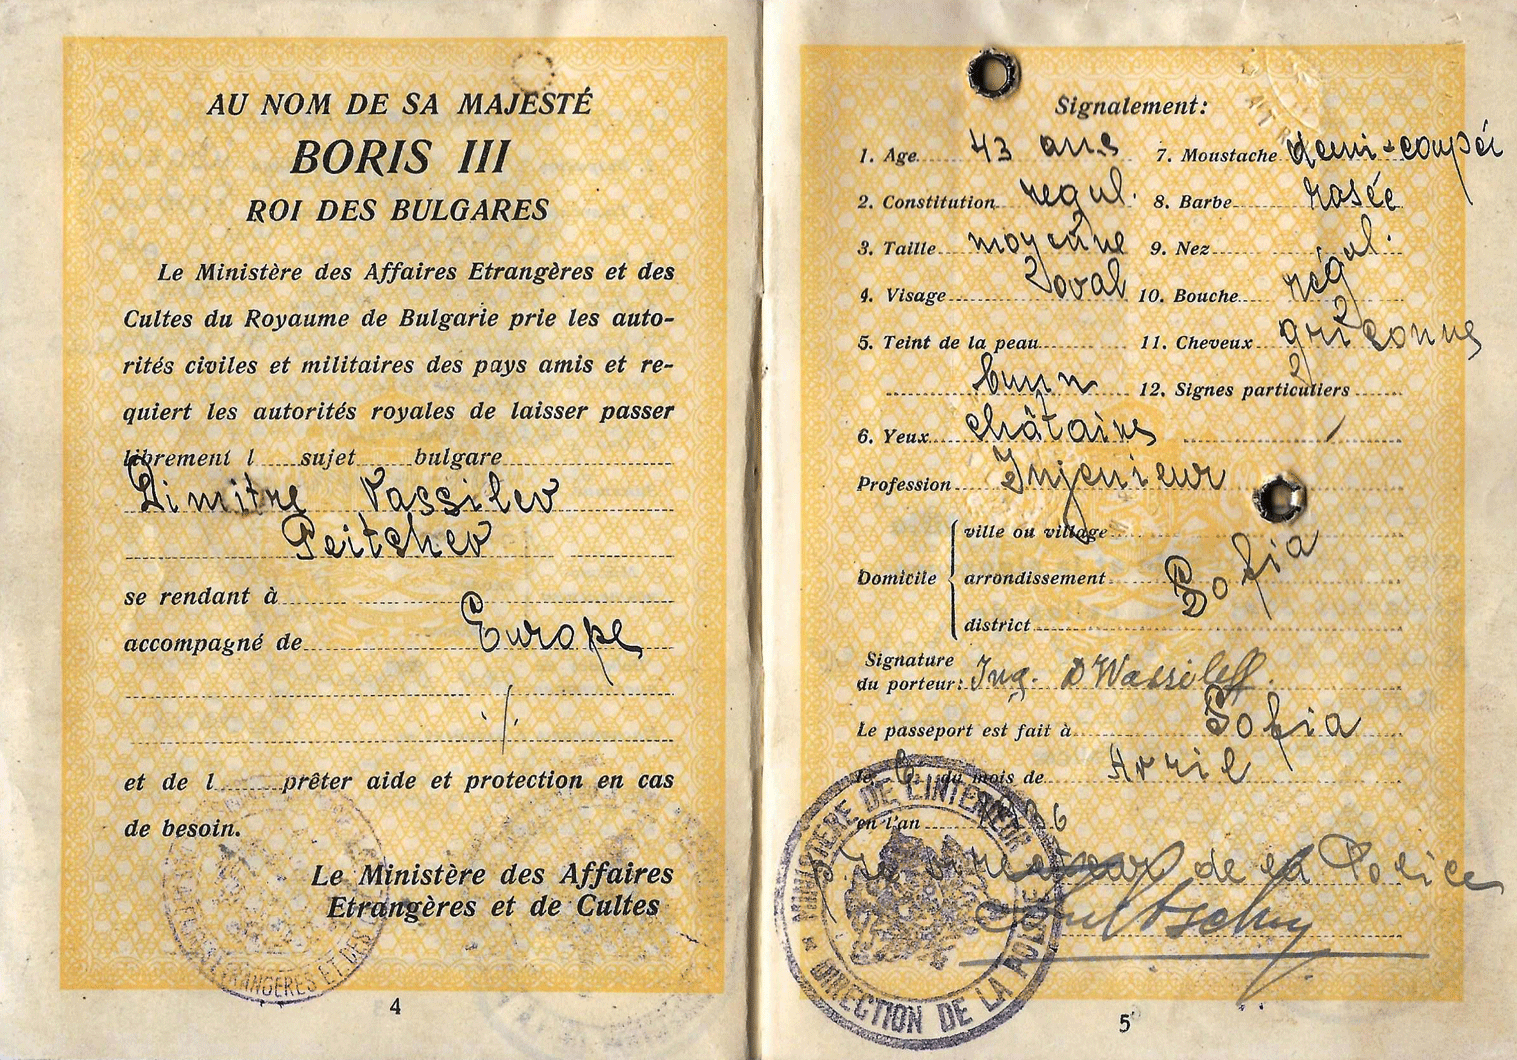 1936 Bulgarian service passport